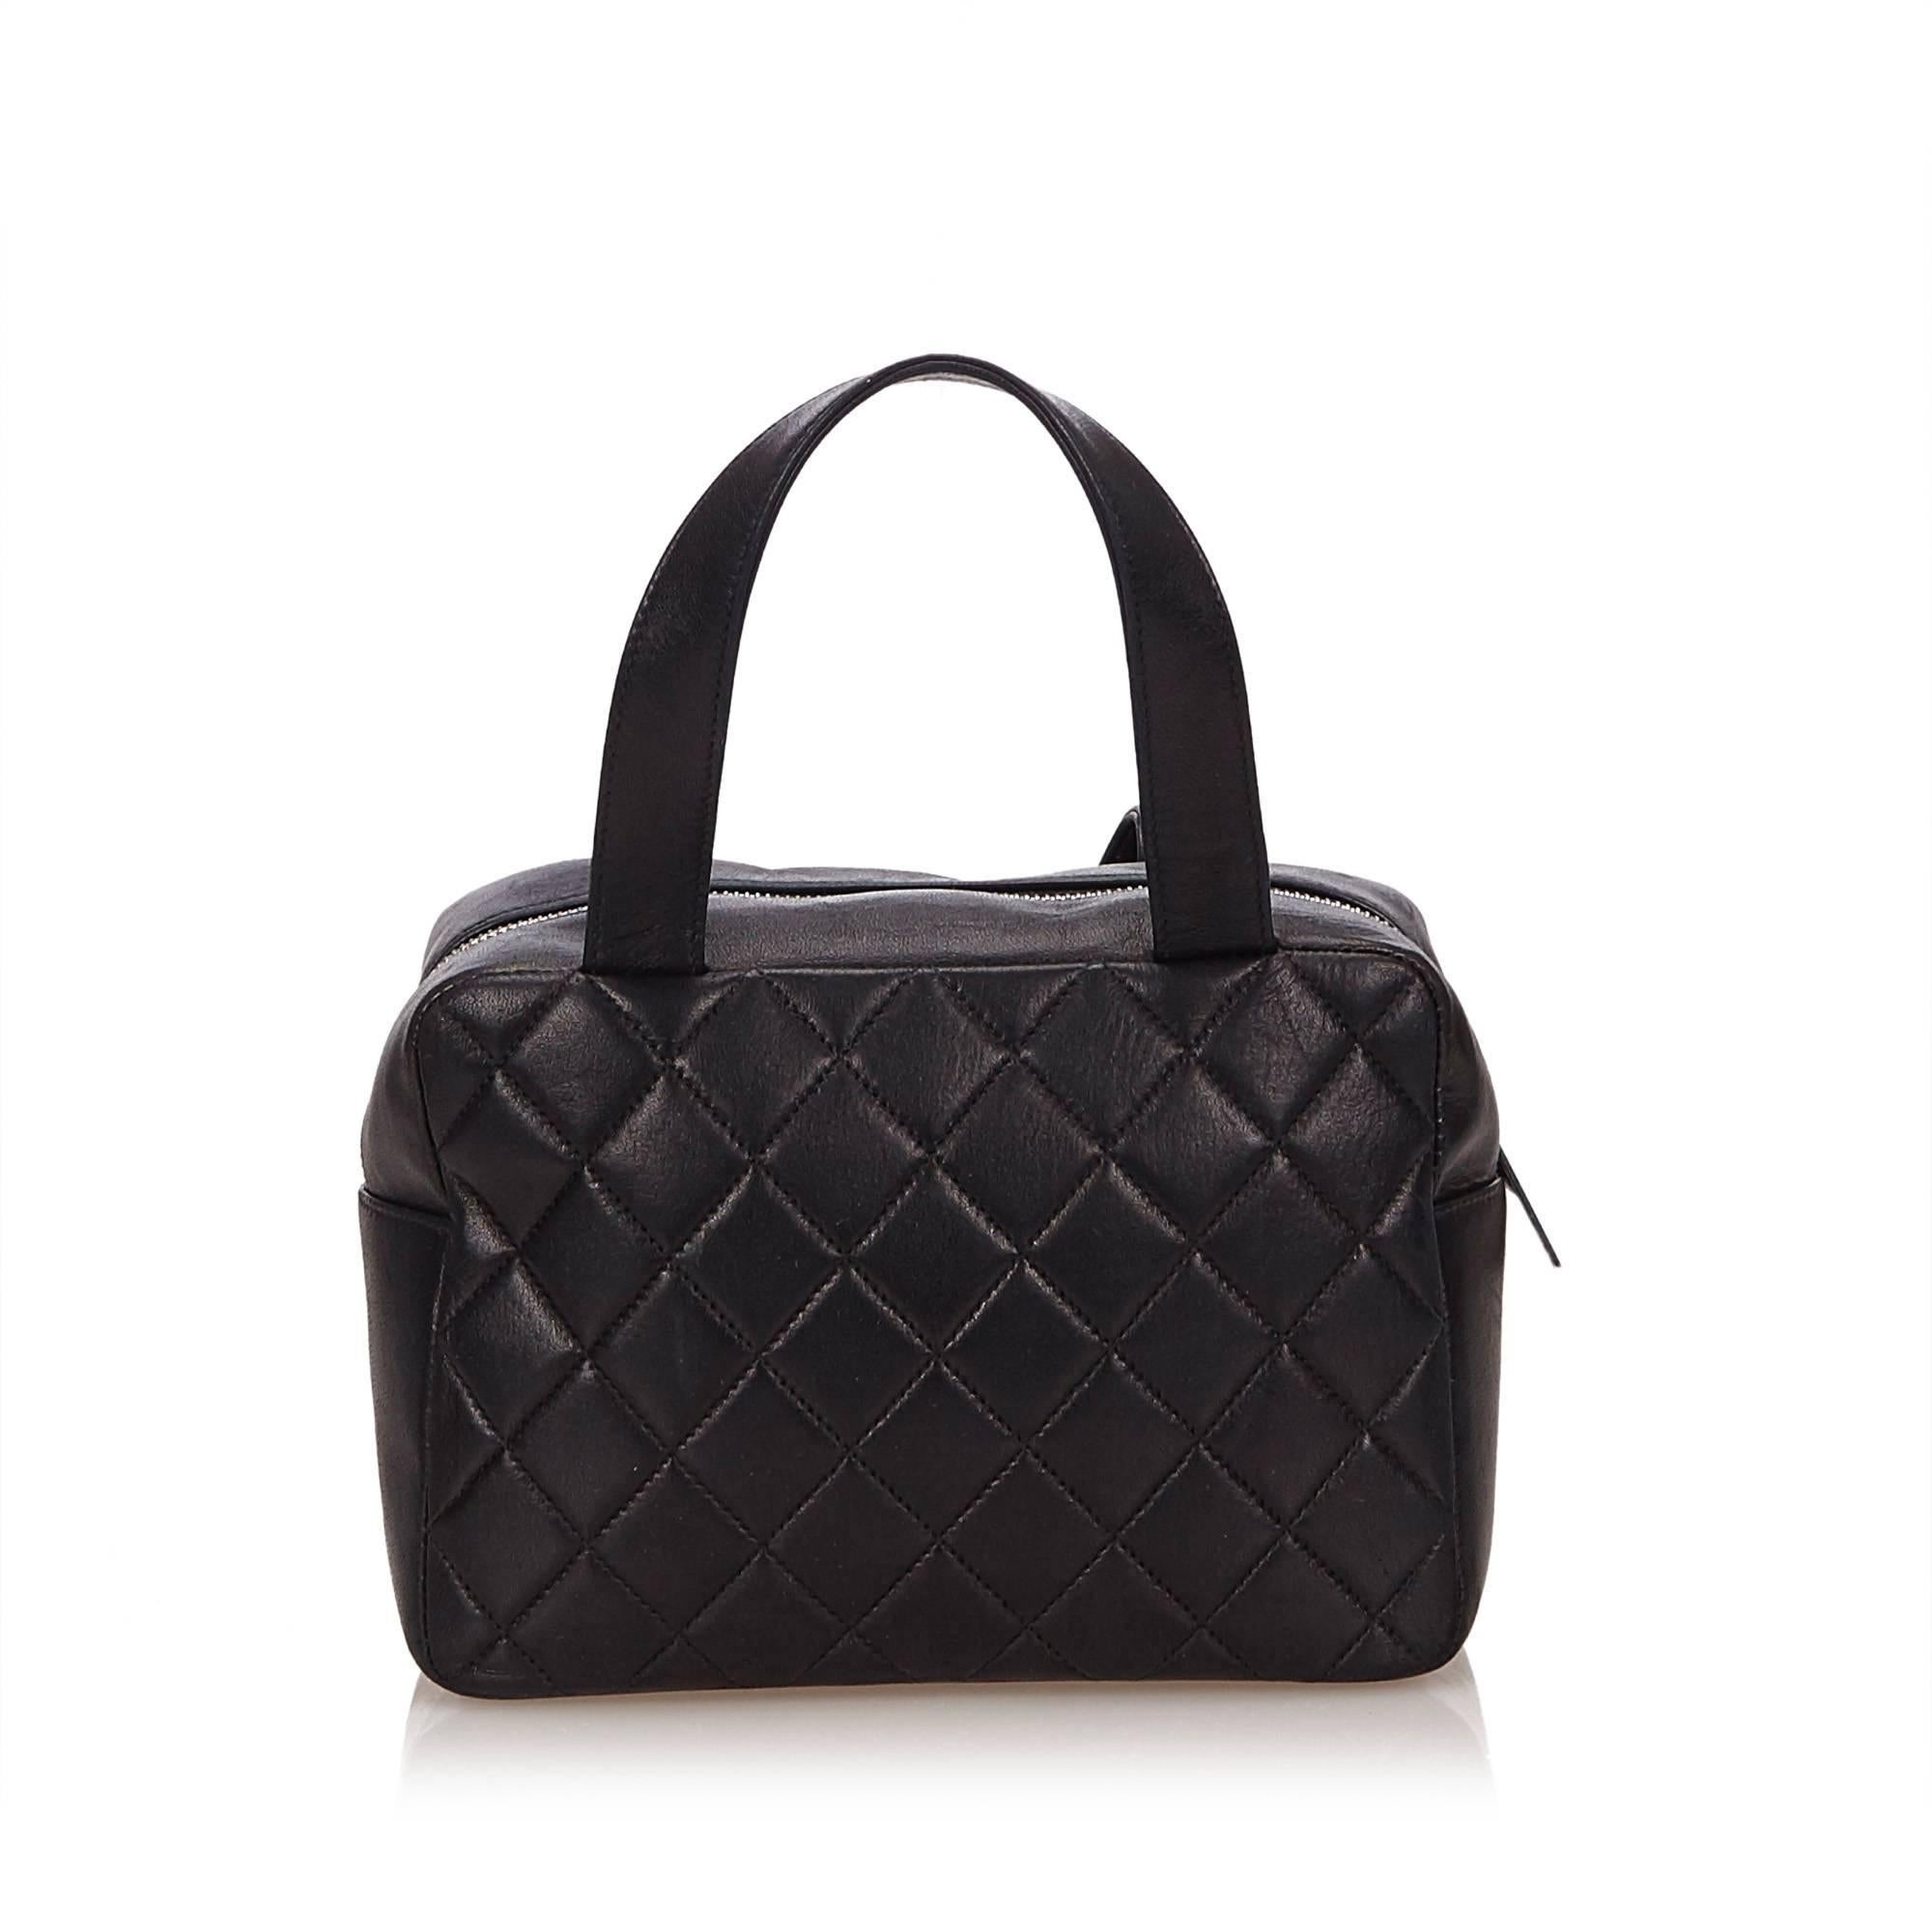 Chanel Black Matelasse Lambskin Leather Handbag In Good Condition For Sale In Orlando, FL